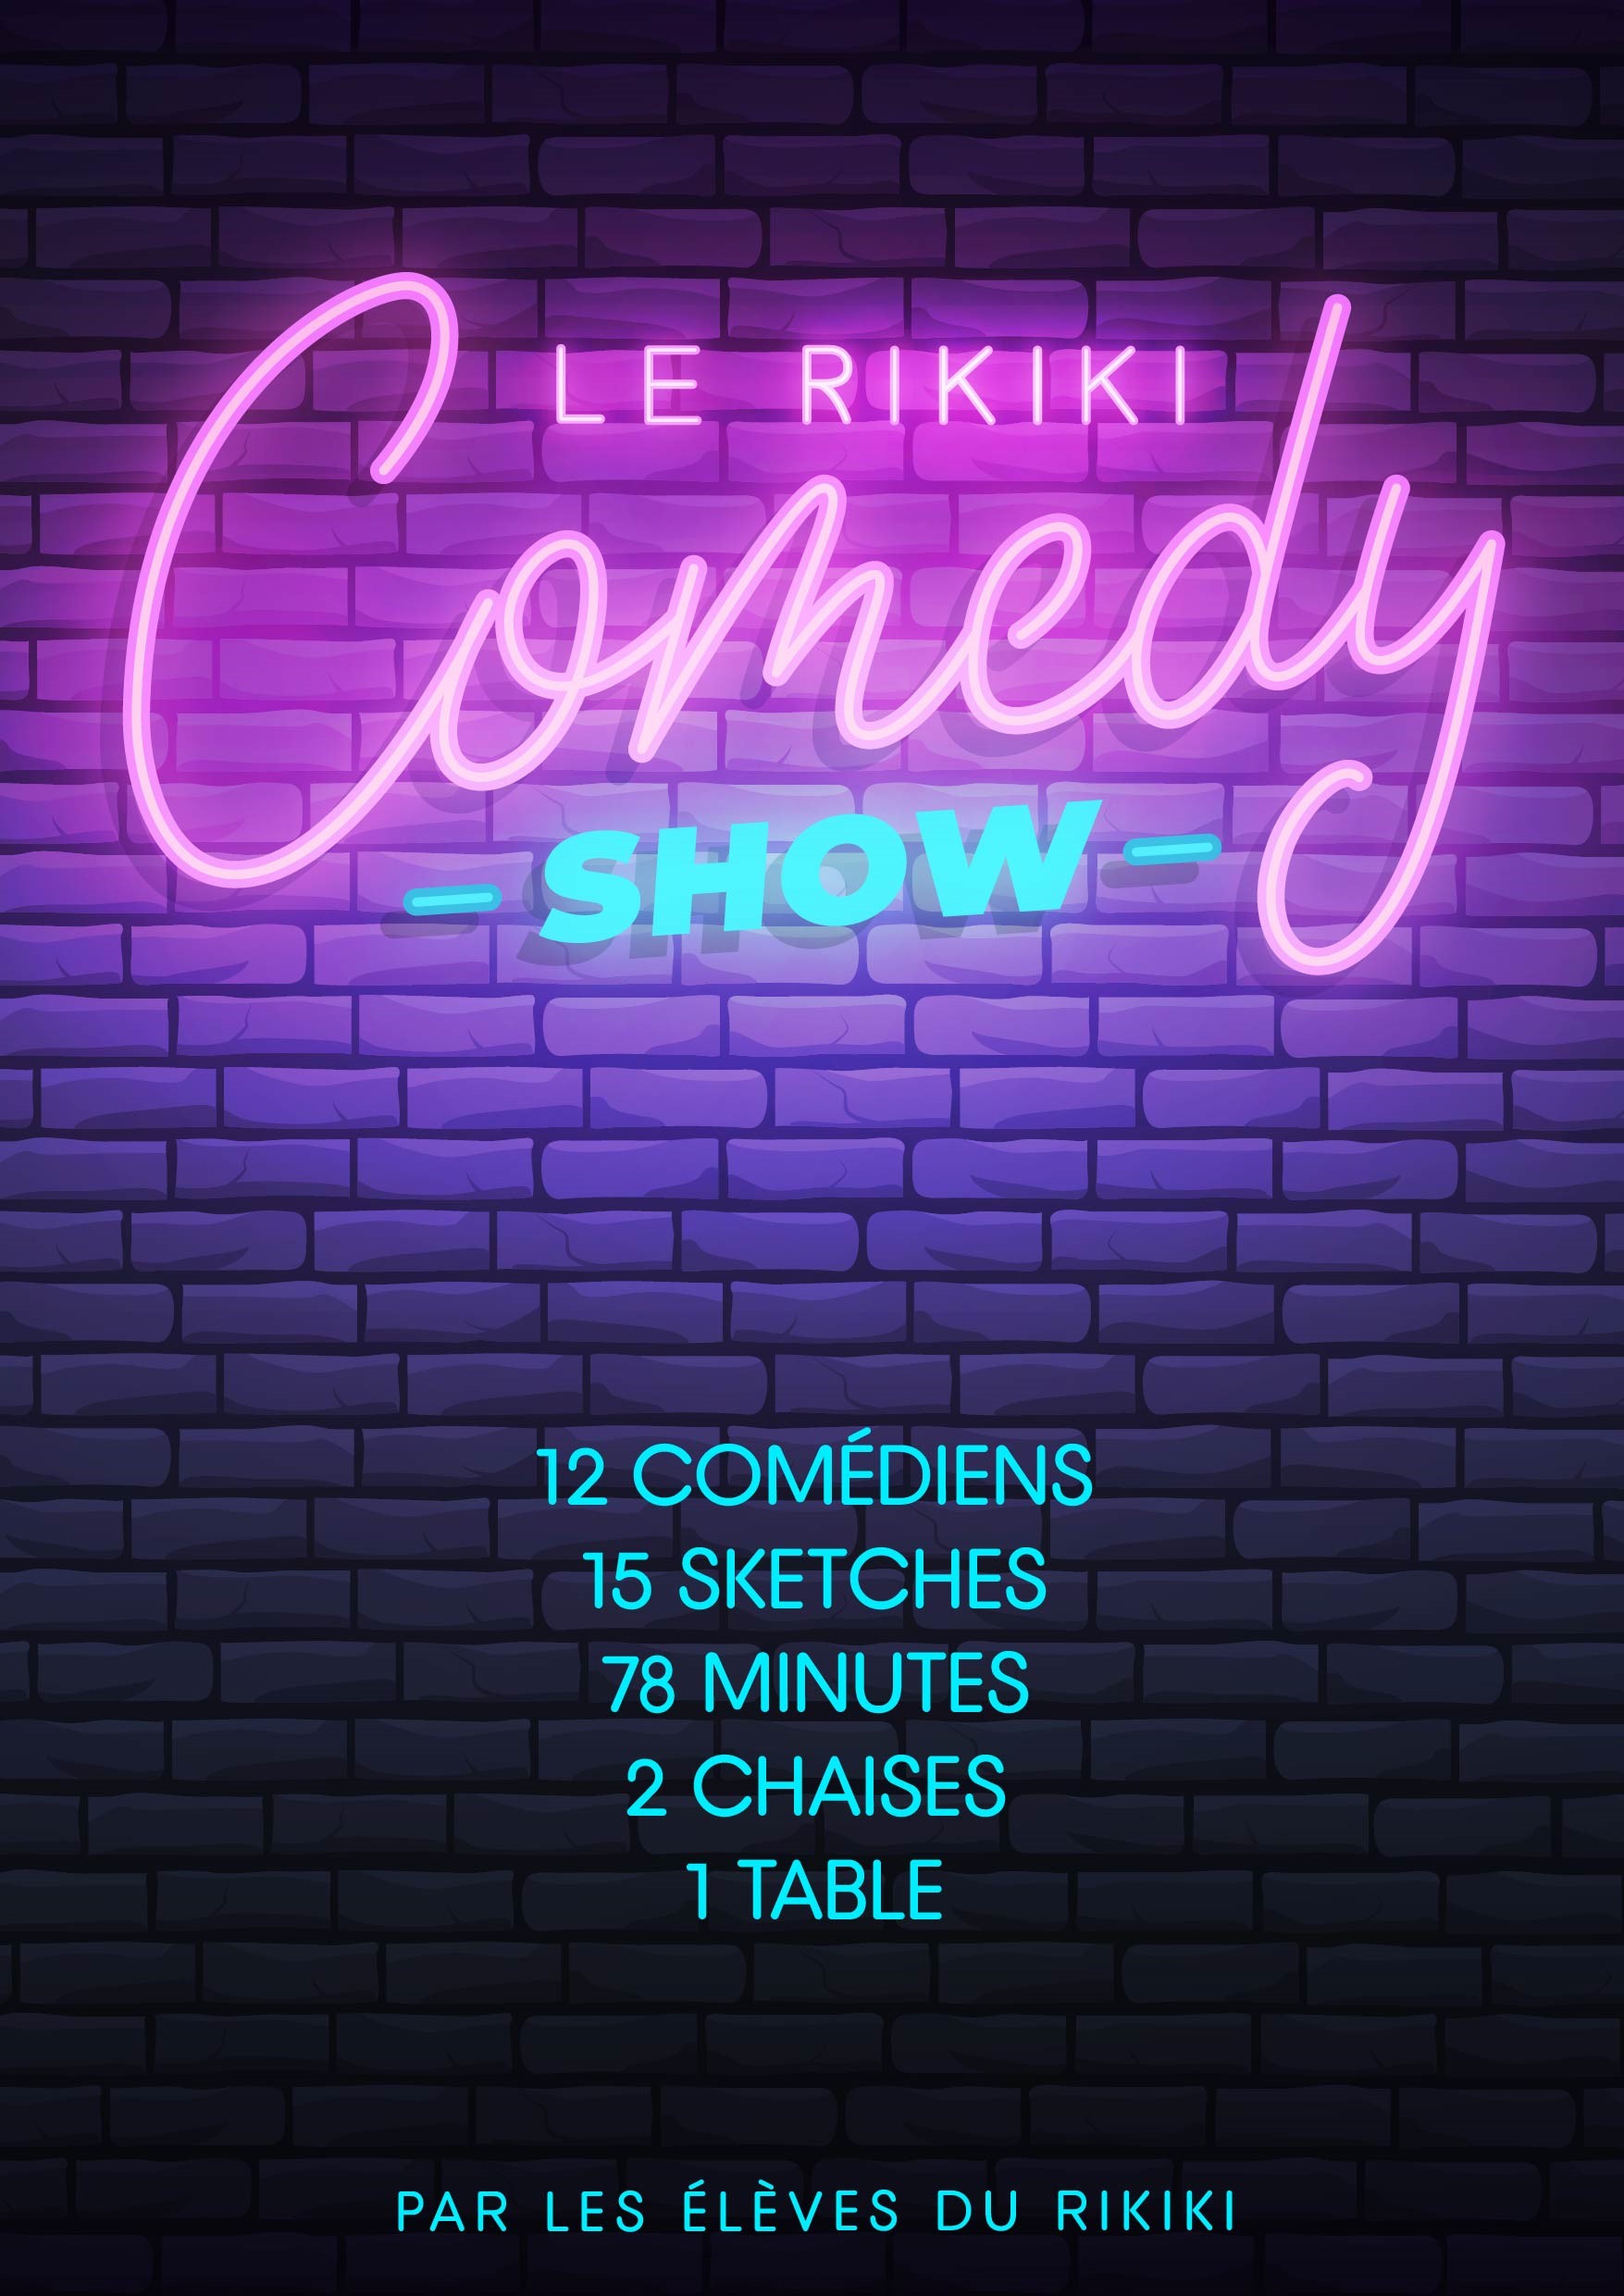 Le Rikiki Comedy Show